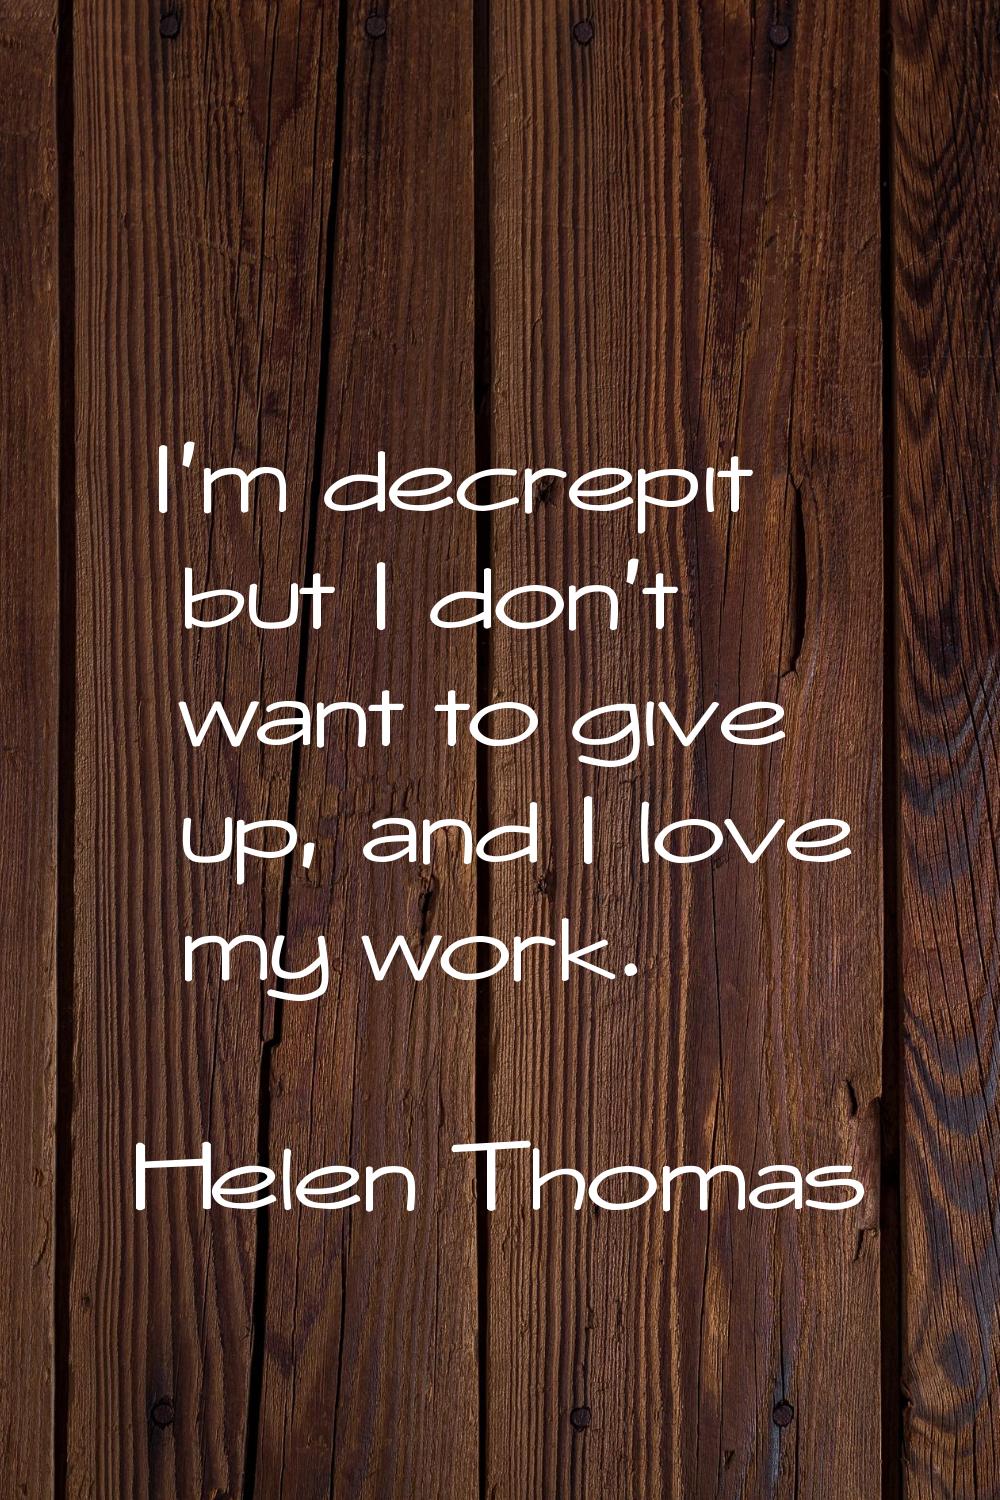 I'm decrepit but I don't want to give up, and I love my work.